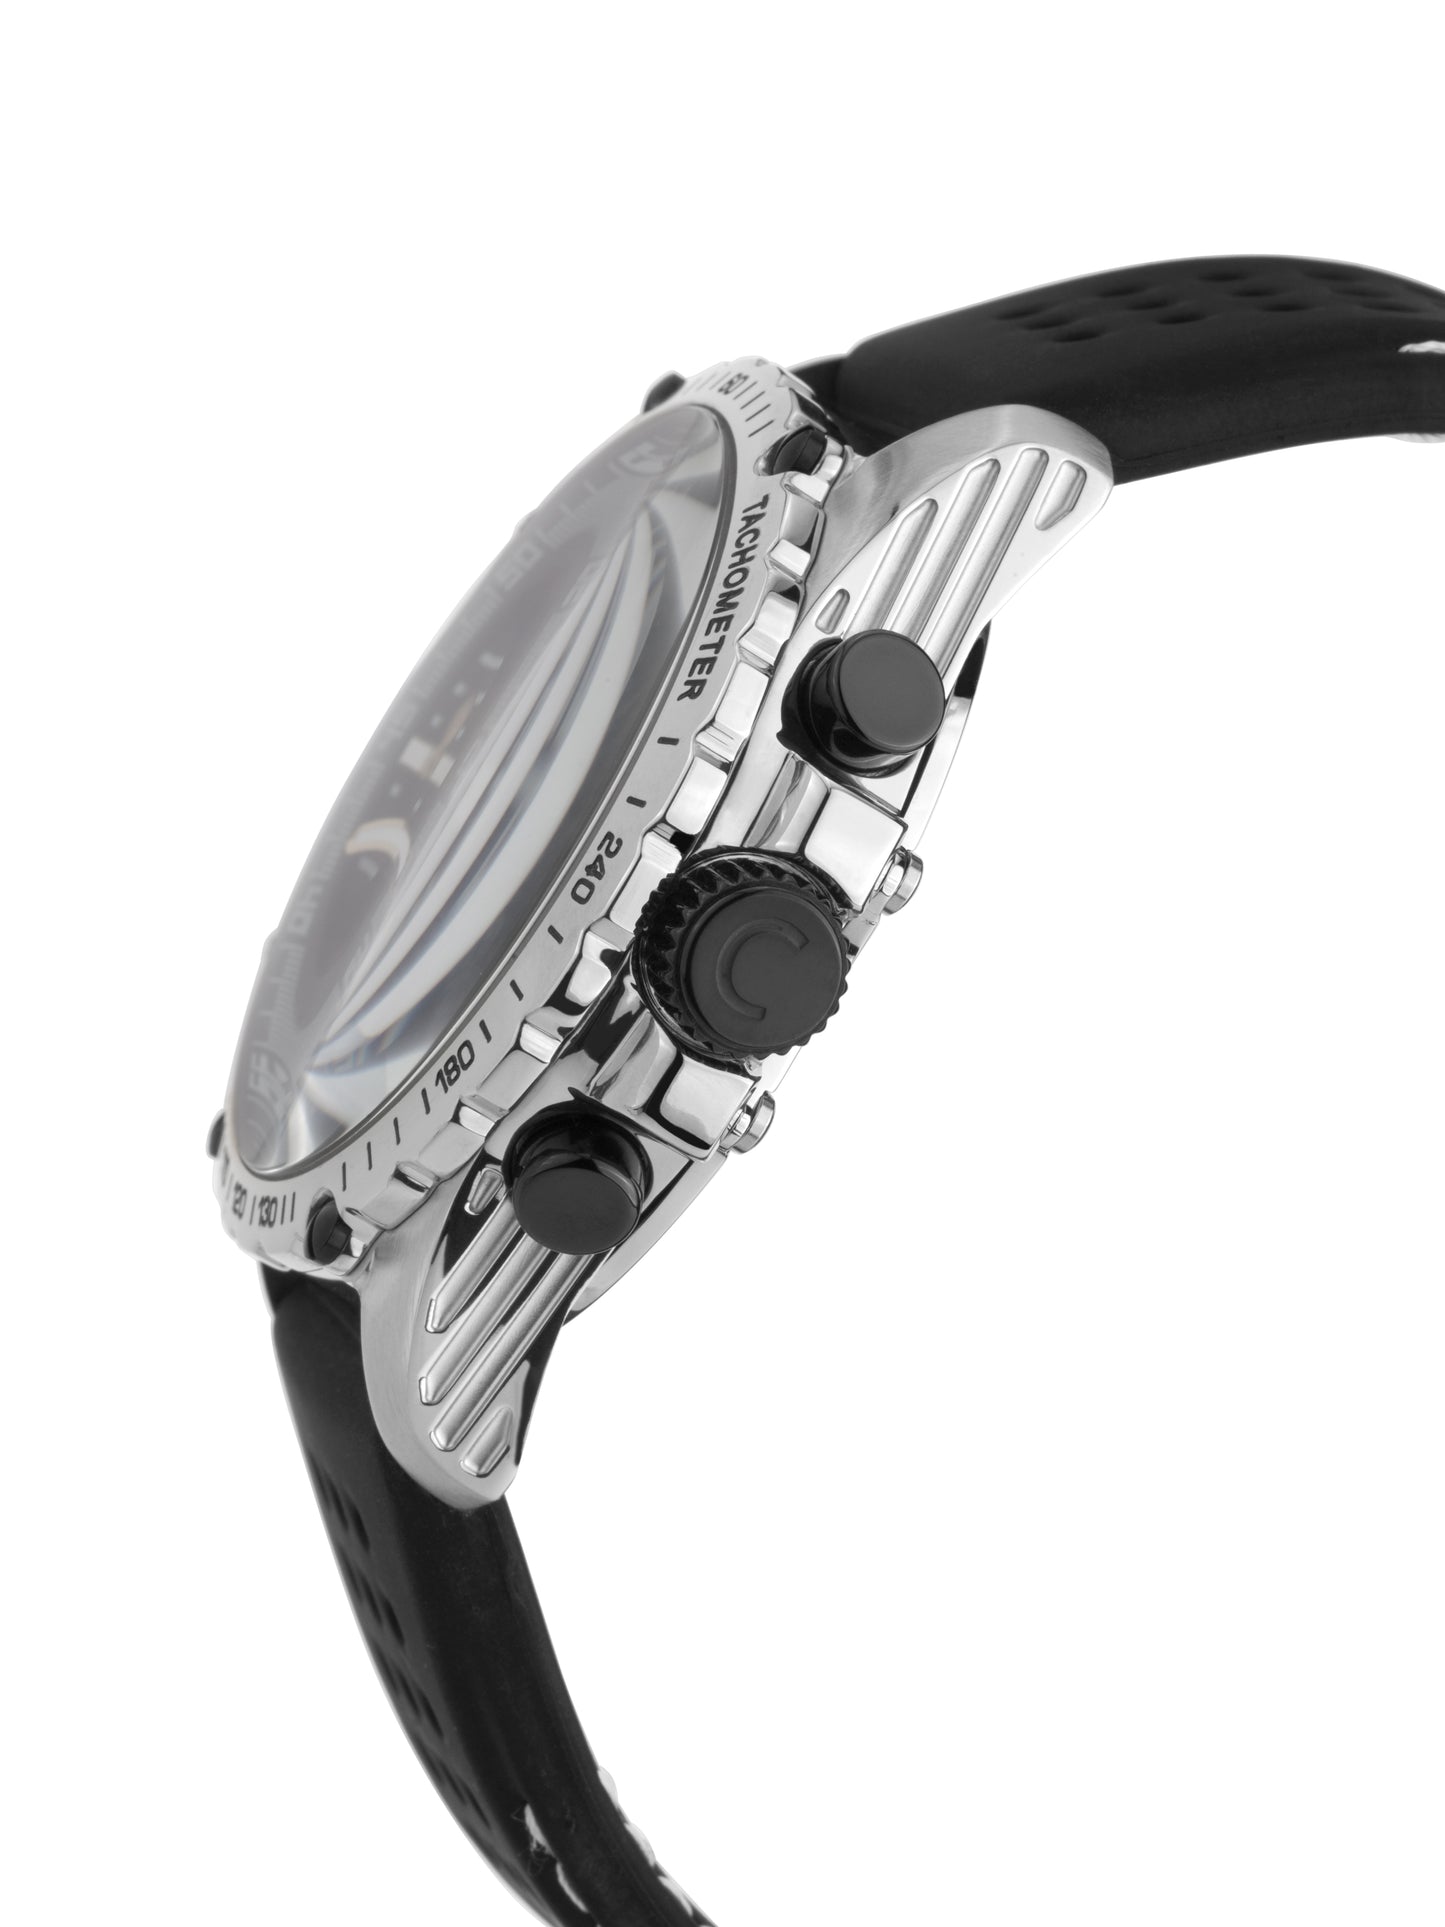 Automatic watches — Neelos — Chrono Diamond — steel black